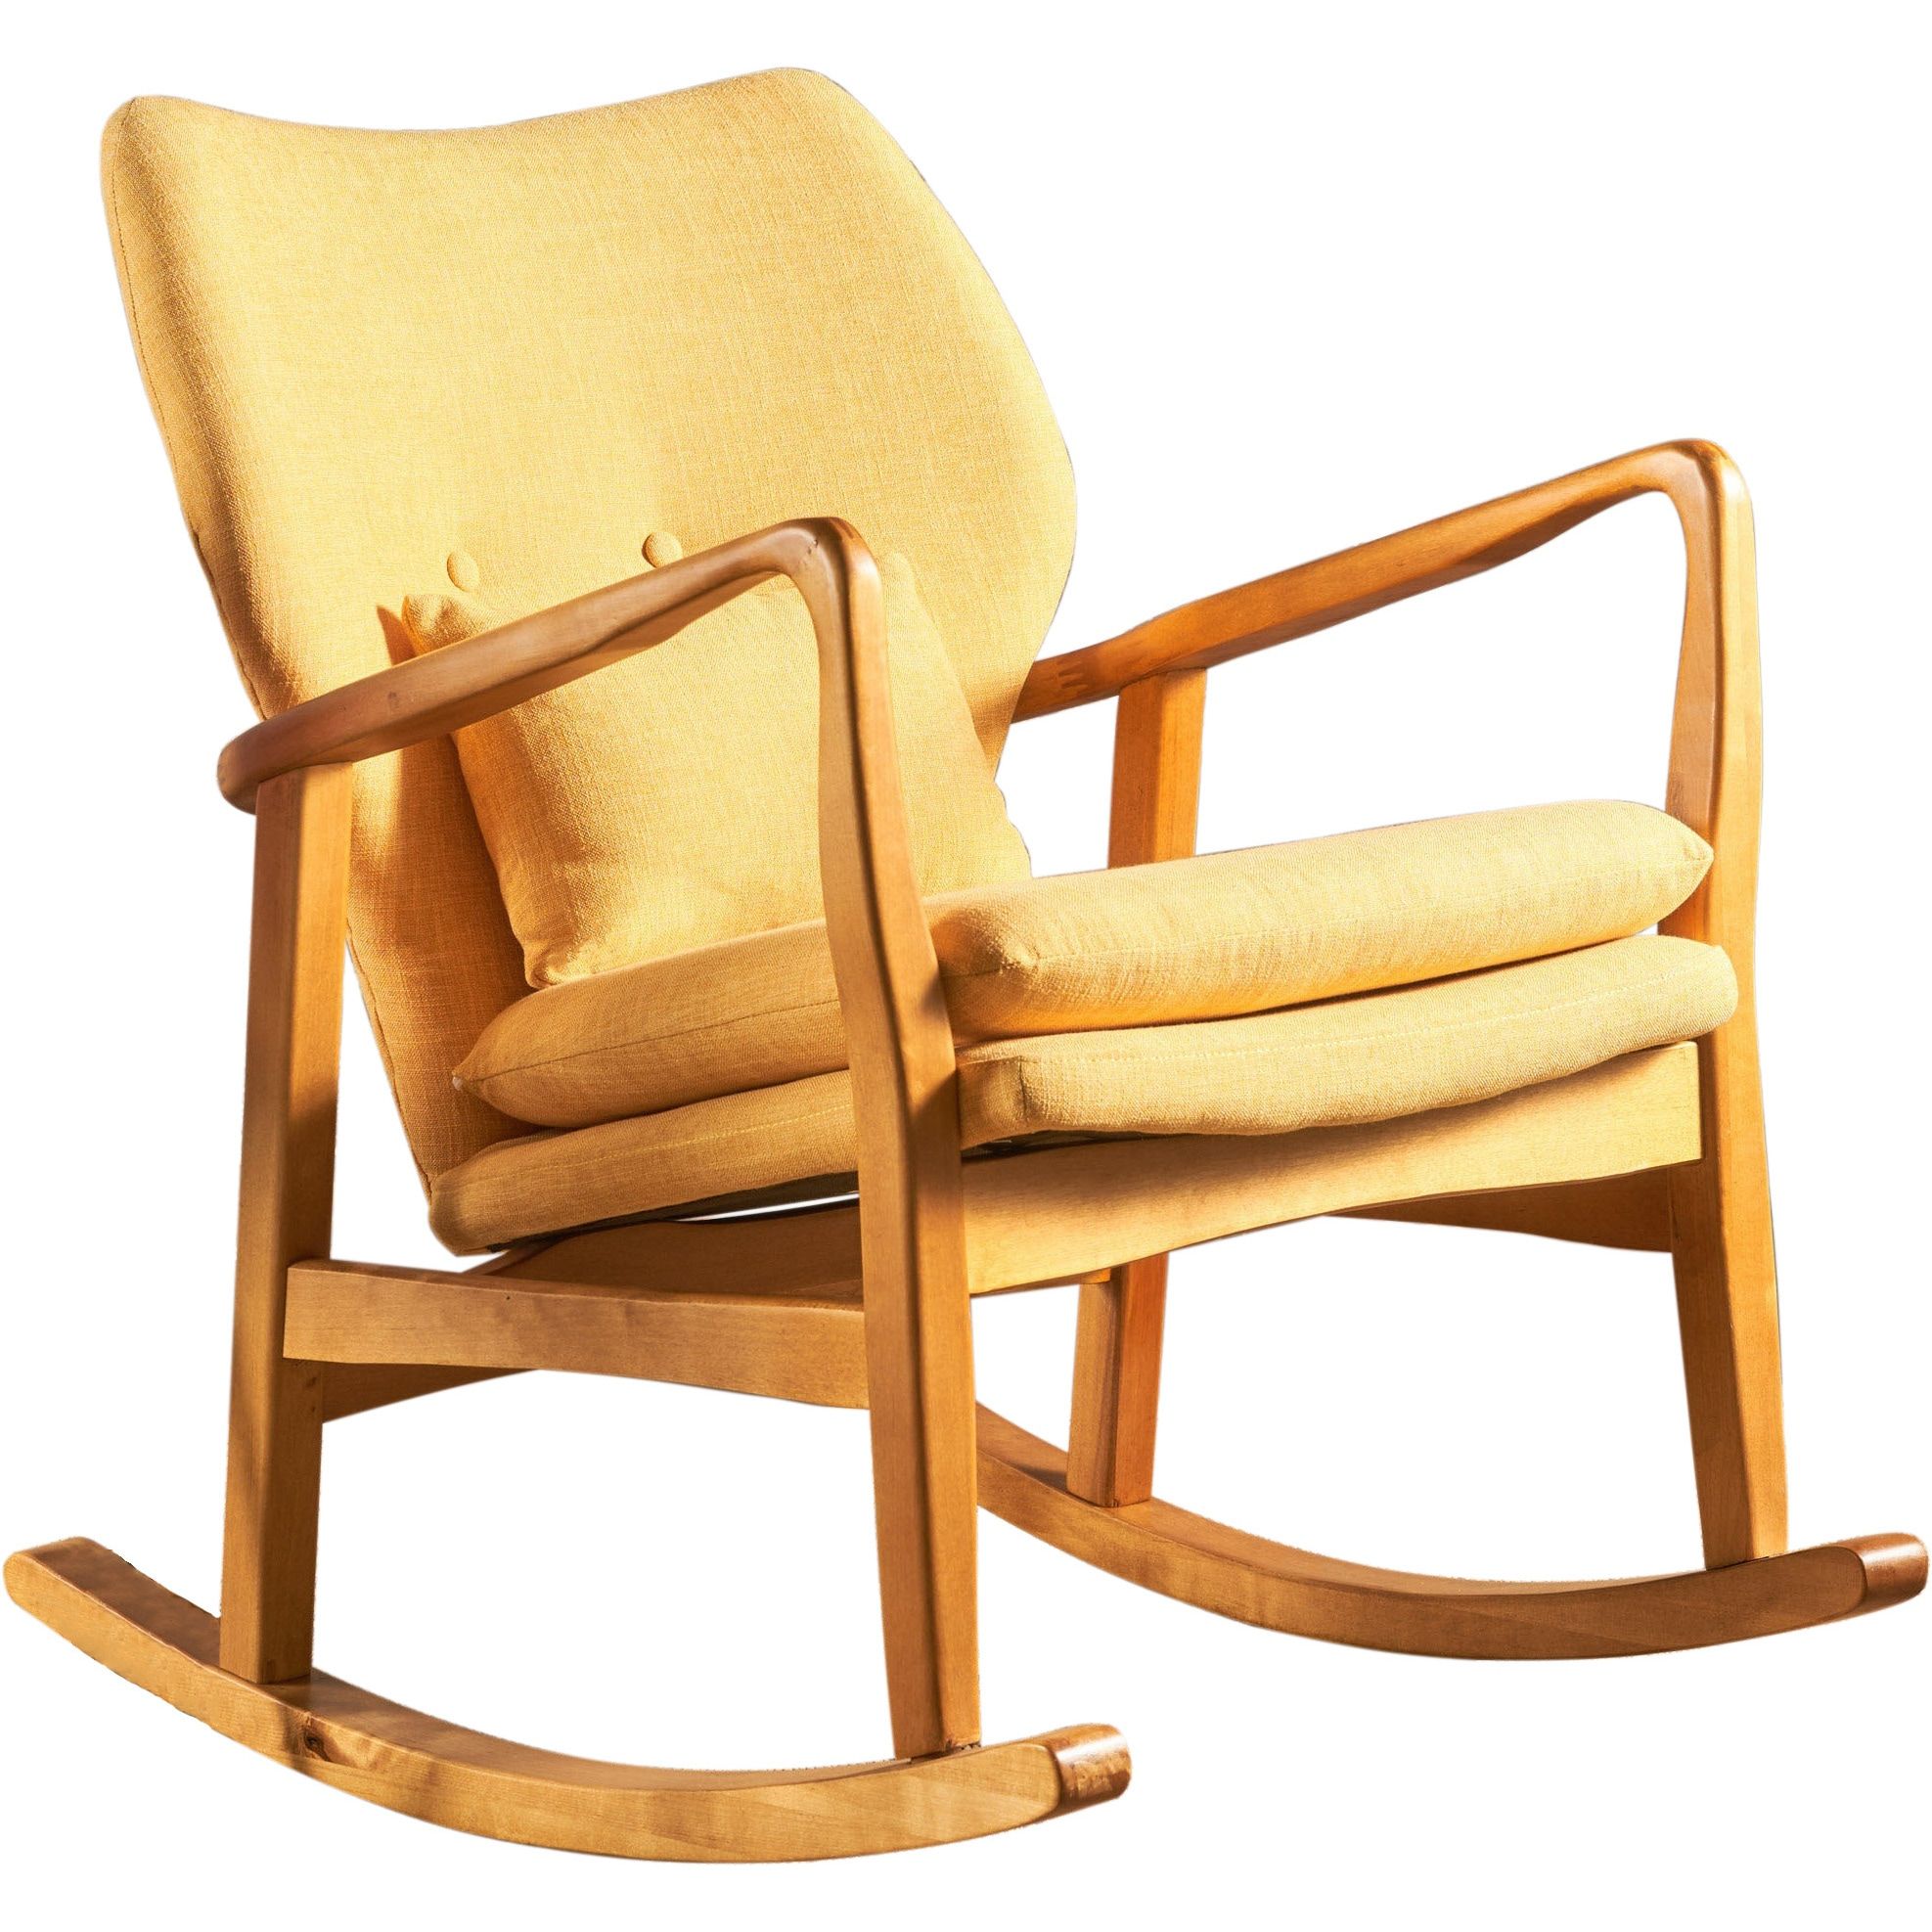 Benny Mid Century Modern Fabric Rocking Chair With Mid Century Fabric Rocking Chairs (View 7 of 20)